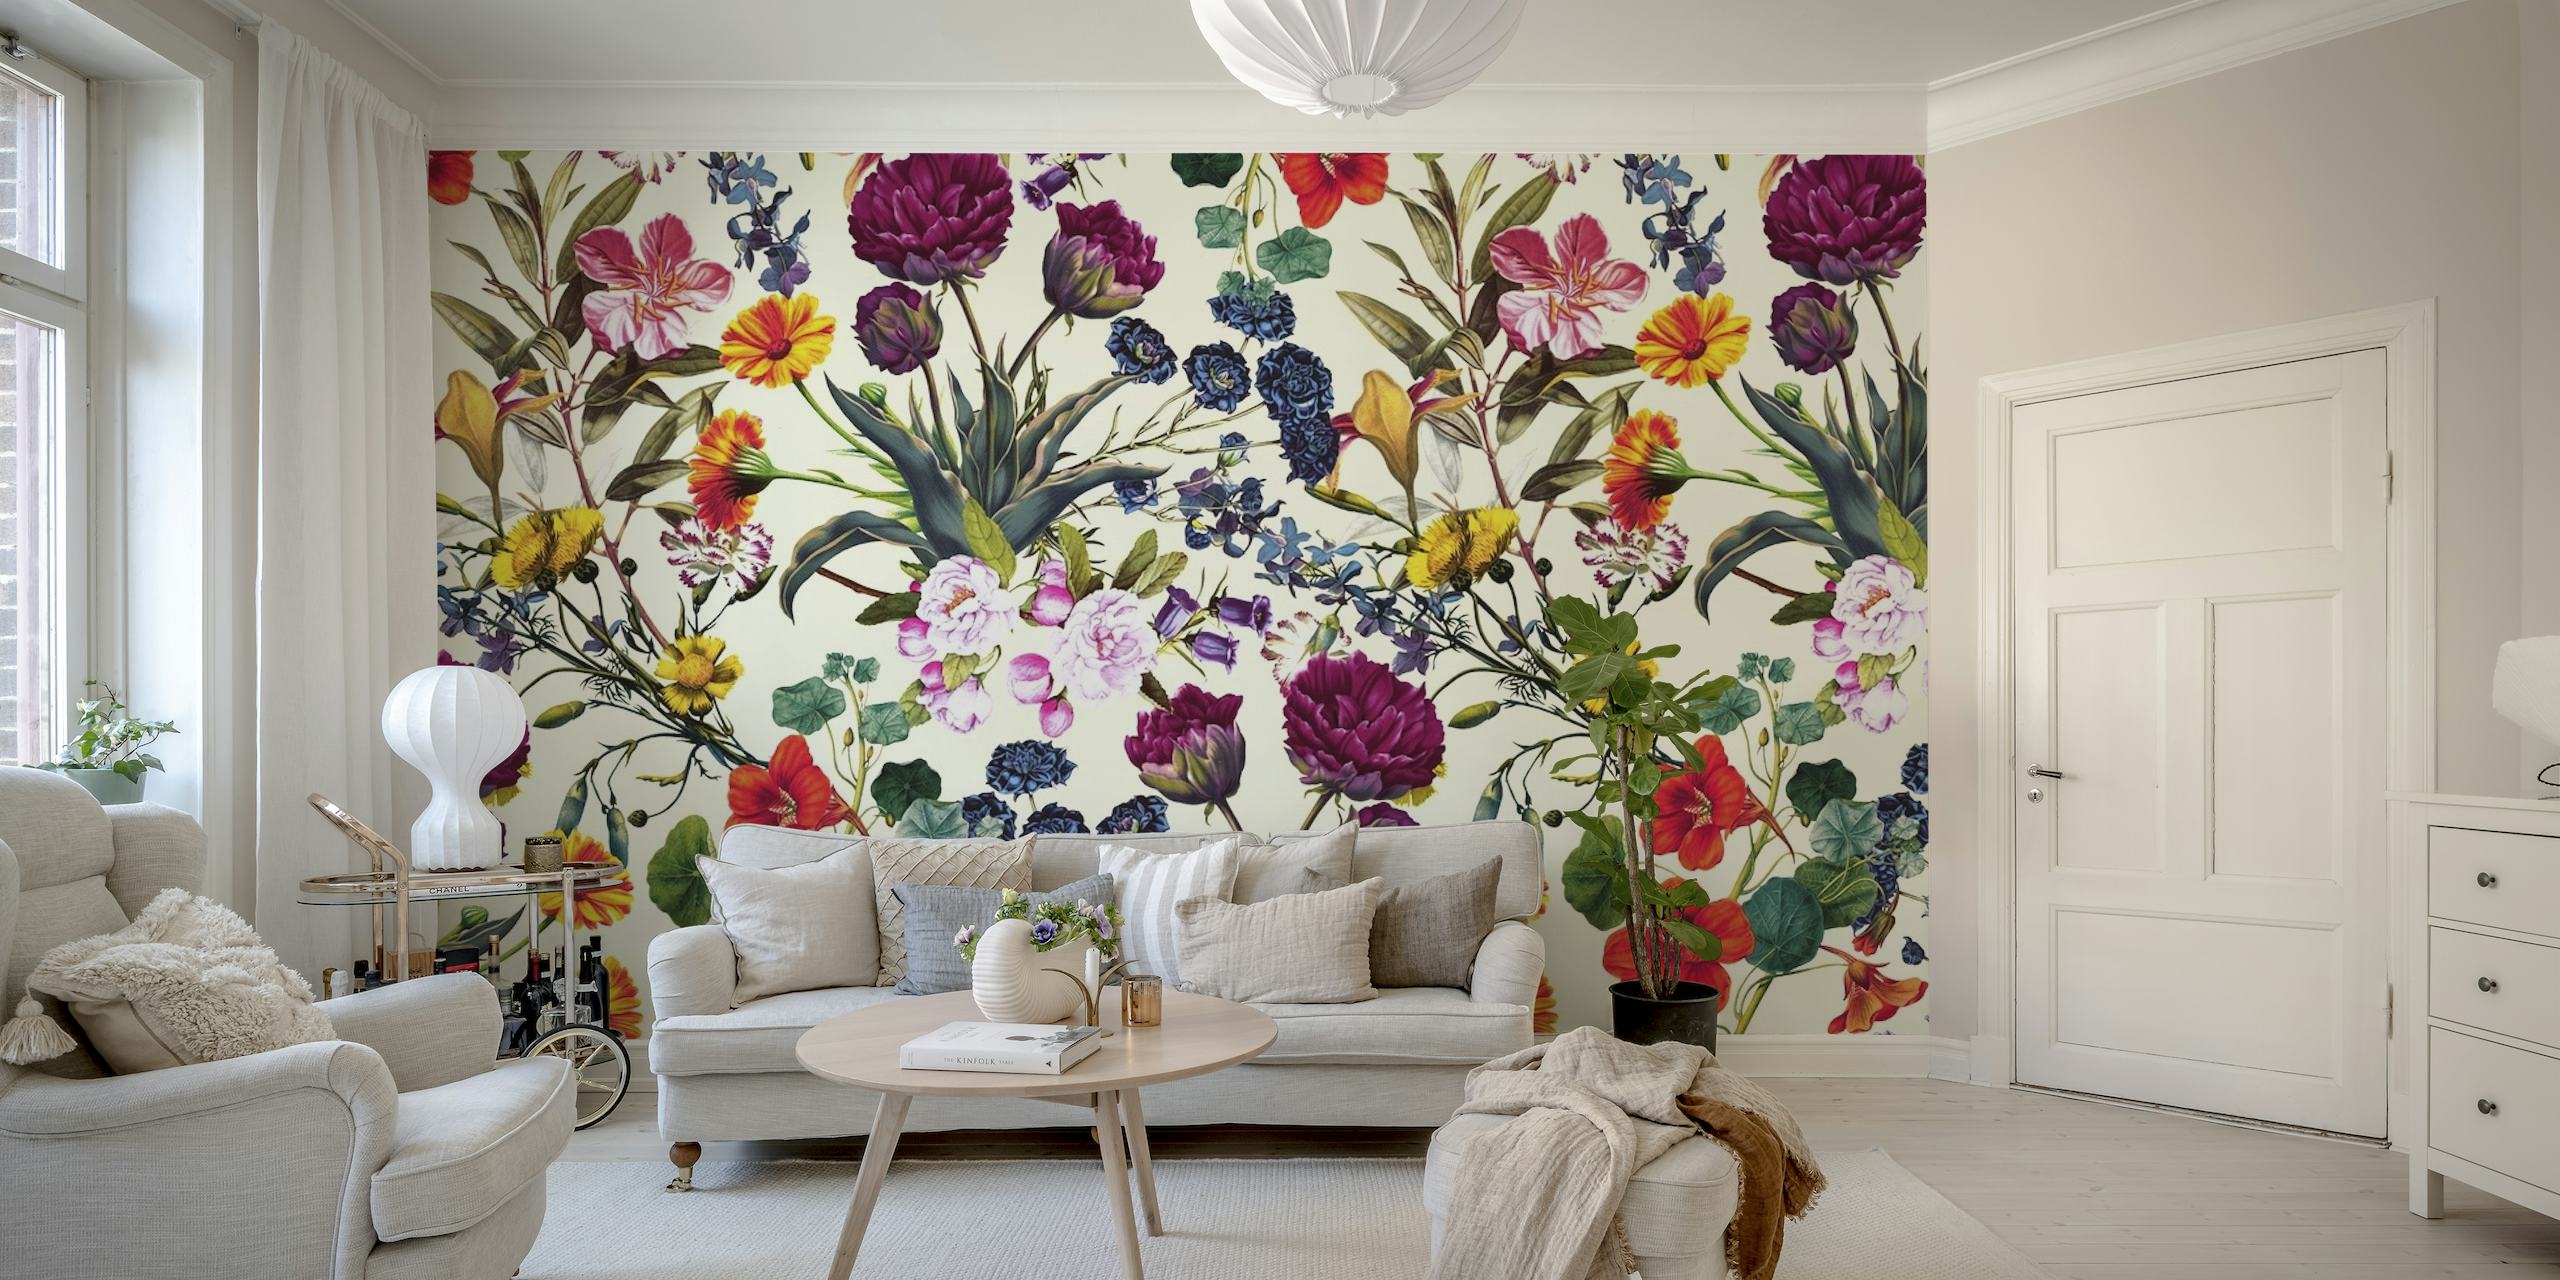 Šareni cvjetni zidni mural 'Magical Garden V' s raznim cvijećem na happywall.com